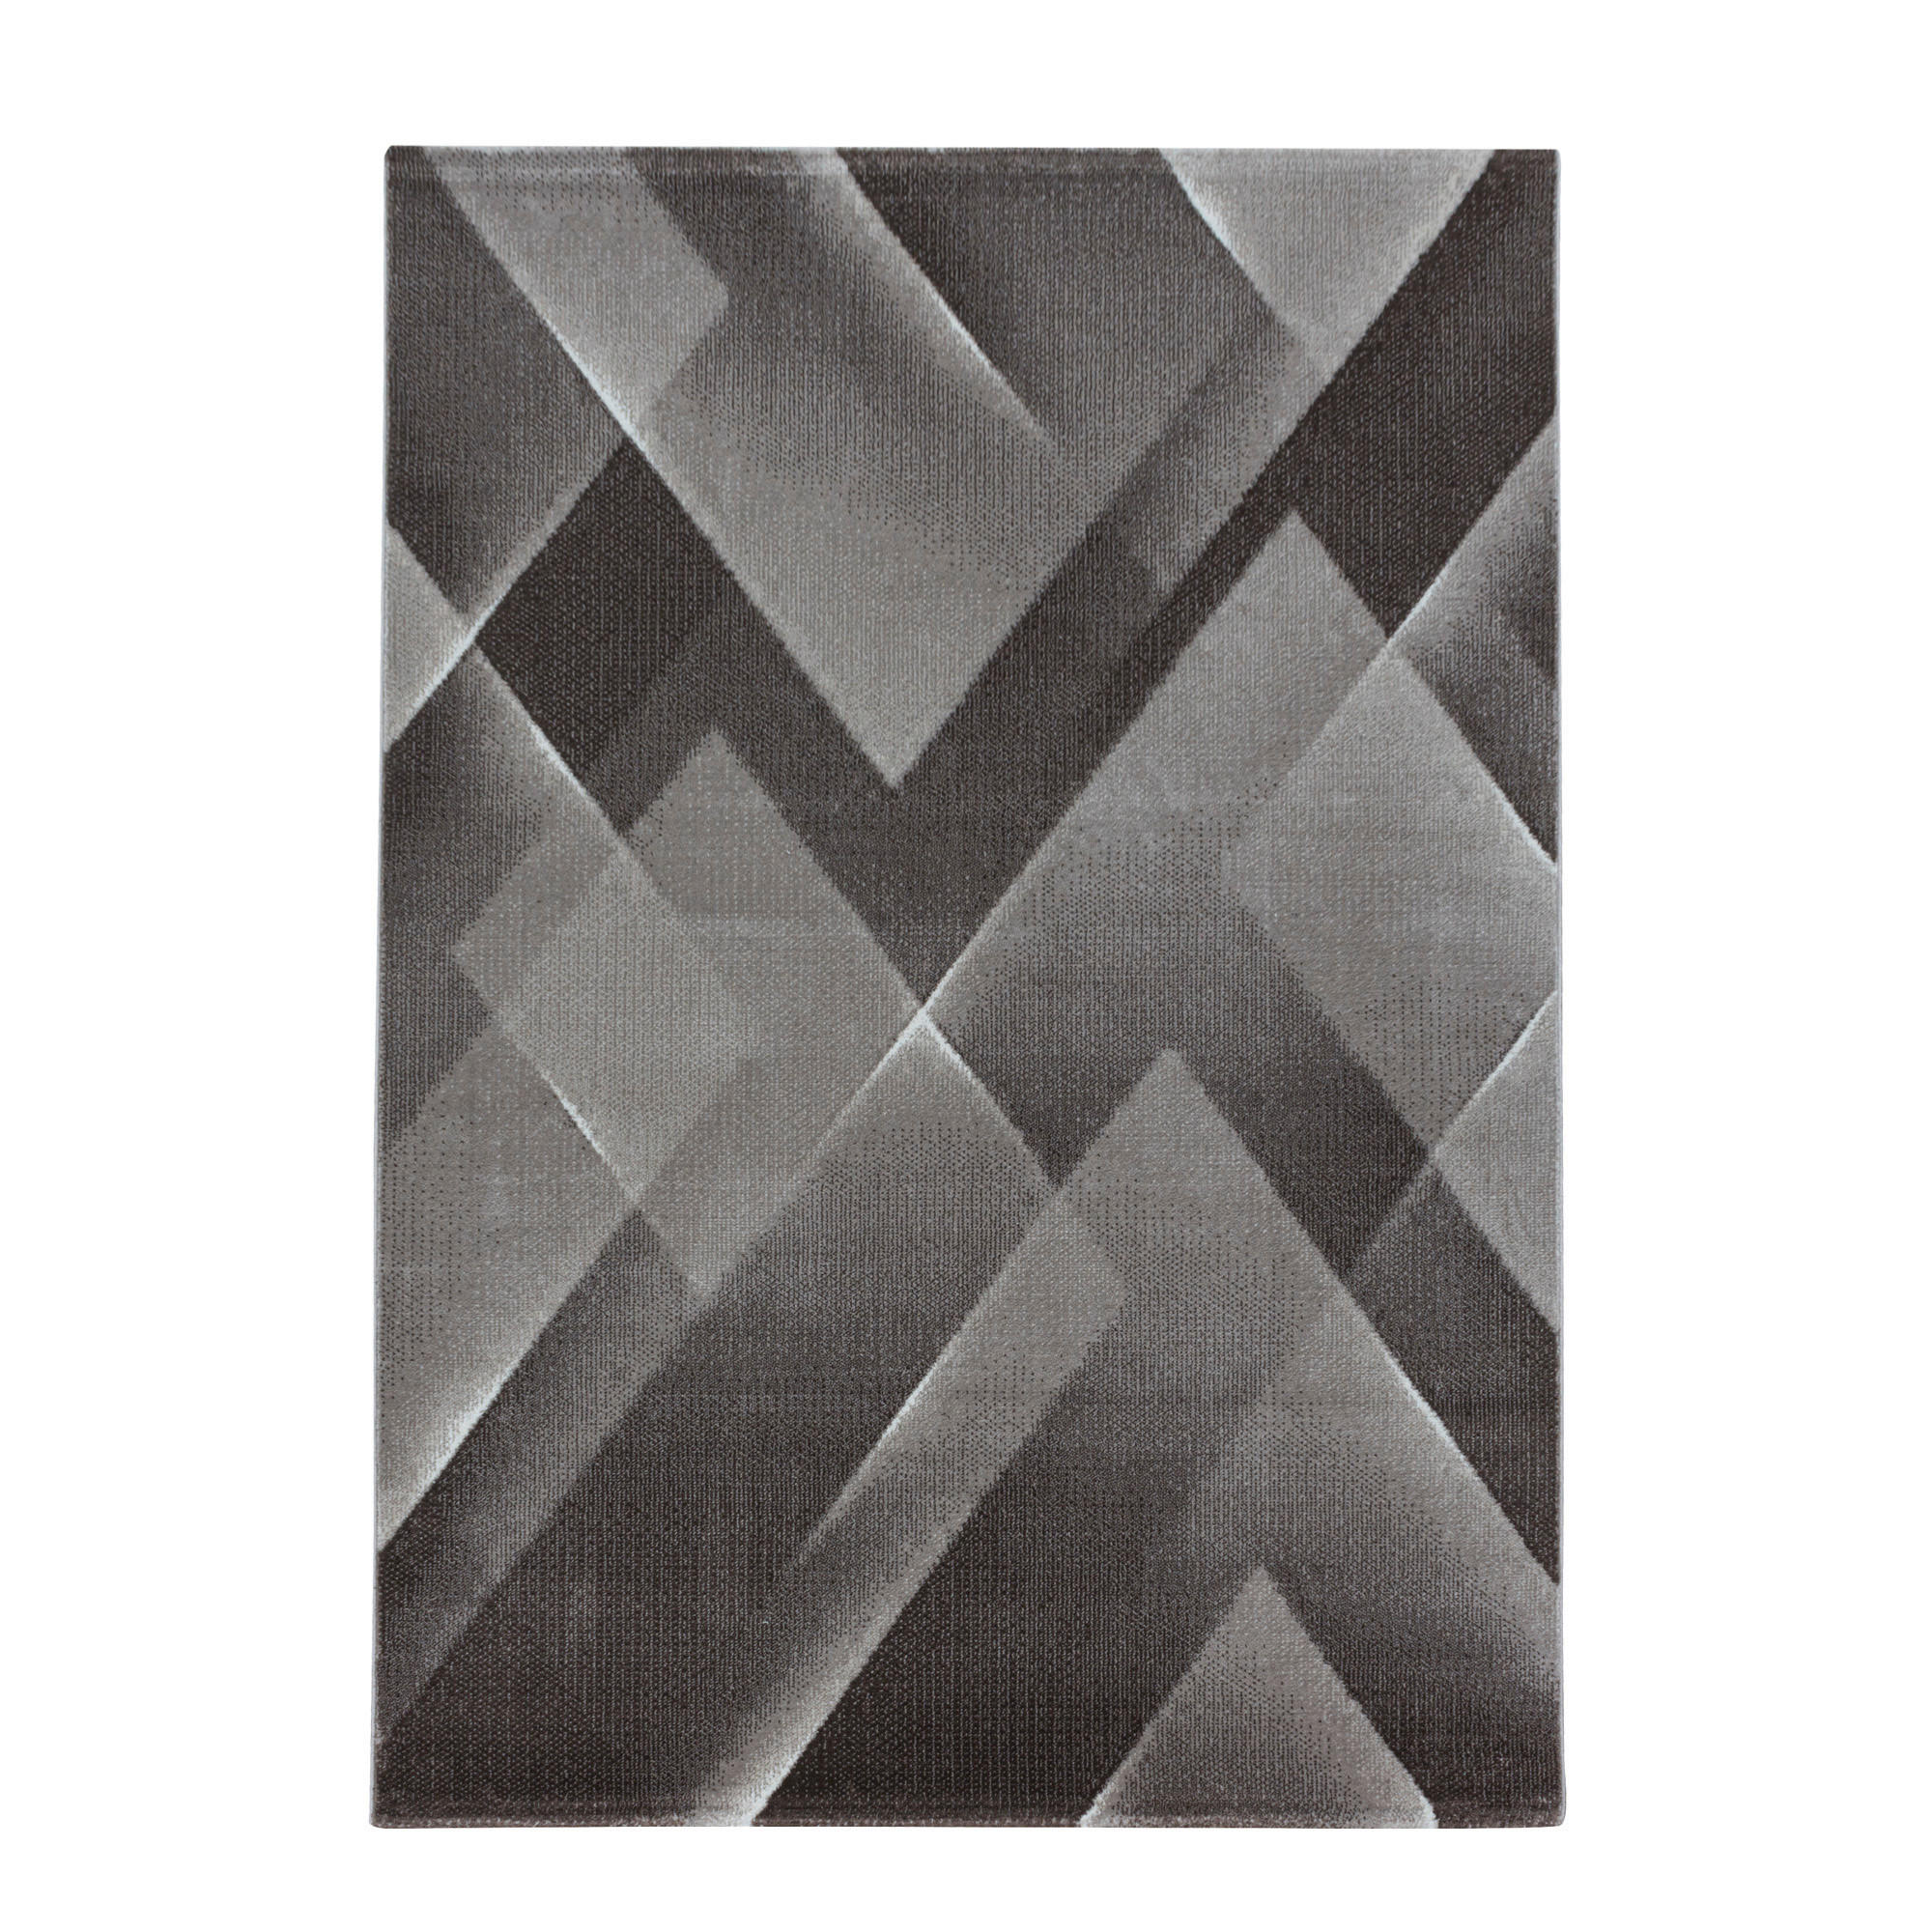 WEBTEPPICH  140/200 cm  Braun   - Braun, Design, Textil (140/200cm) - Novel